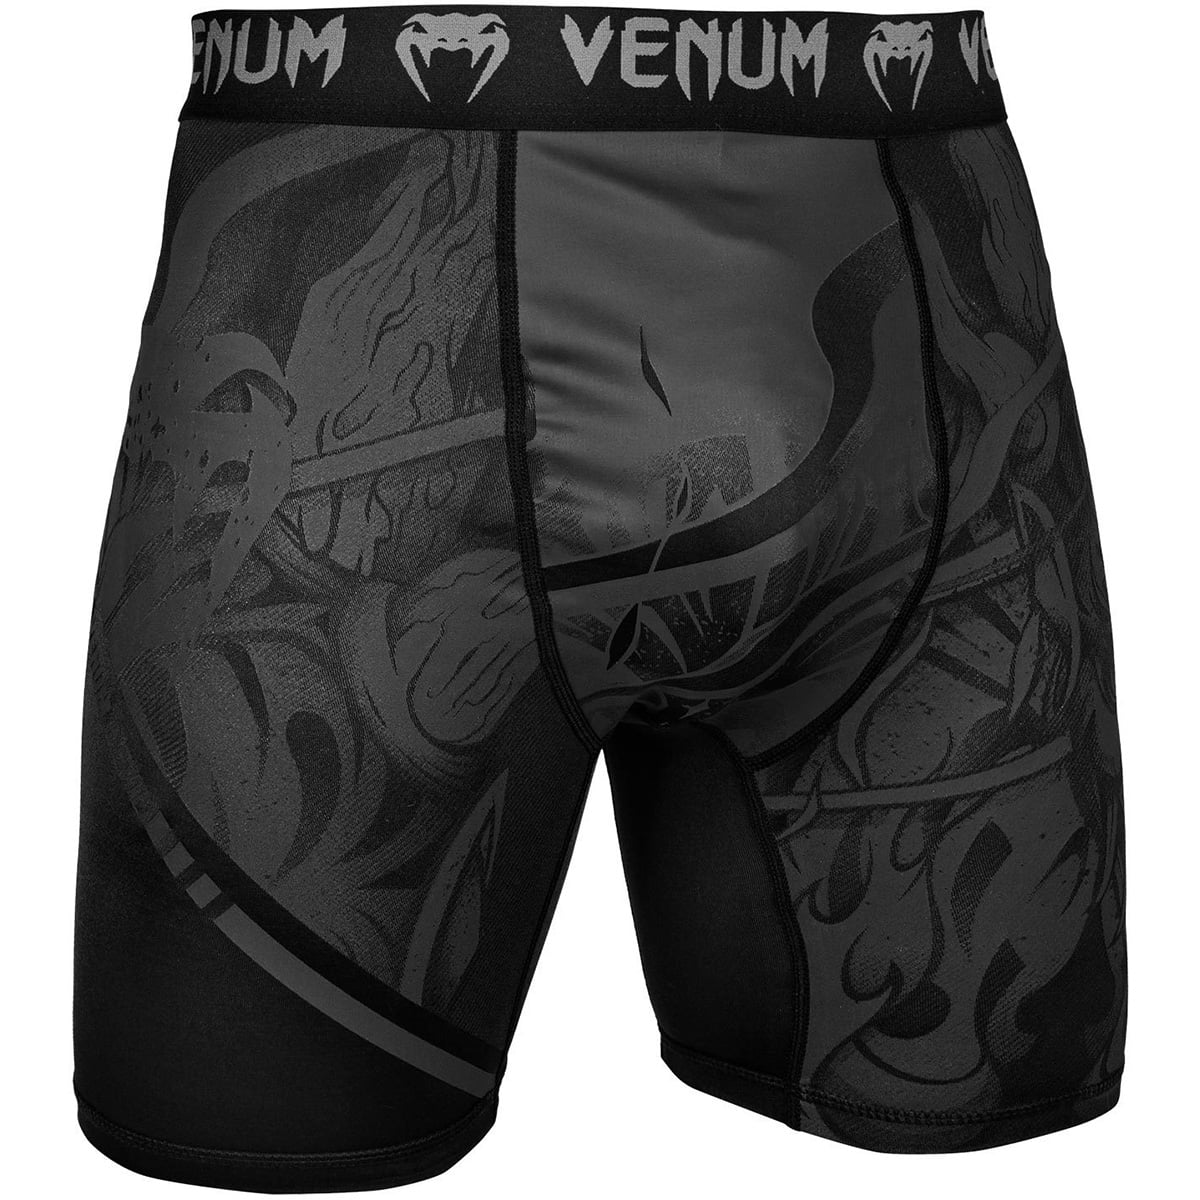 Black/Black Venum Devil MMA Compression Shorts 